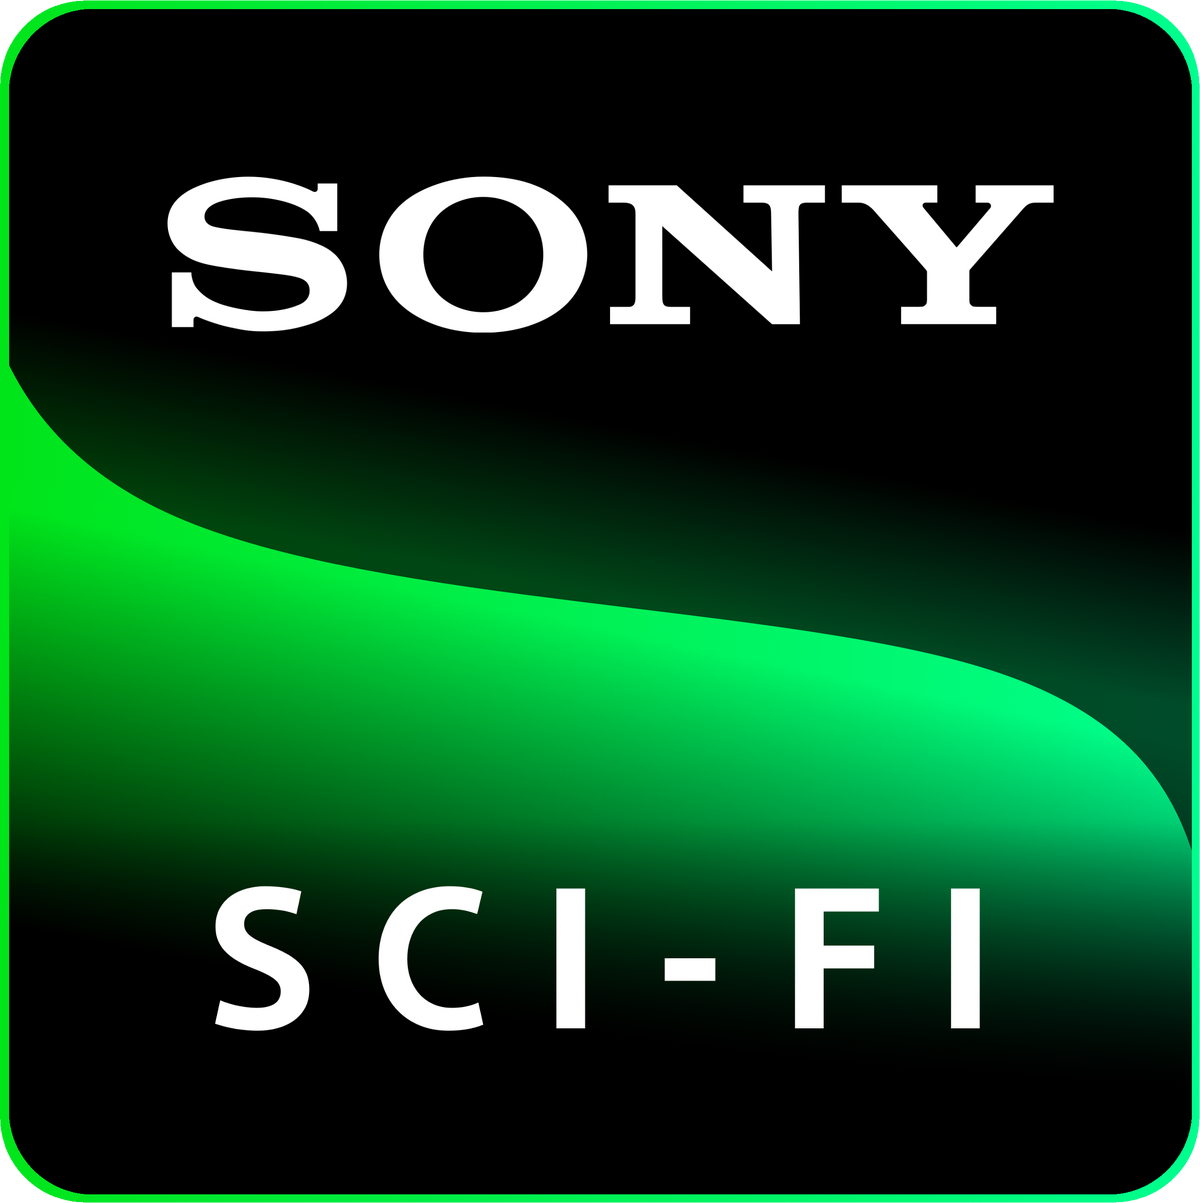 Sony sci fi эфир. Телеканал Sony Sci-Fi. Телеканал Sony Sci-Fi логотип. Программа Sony .Sci-Fi. Sony Sci-Fi реклама.